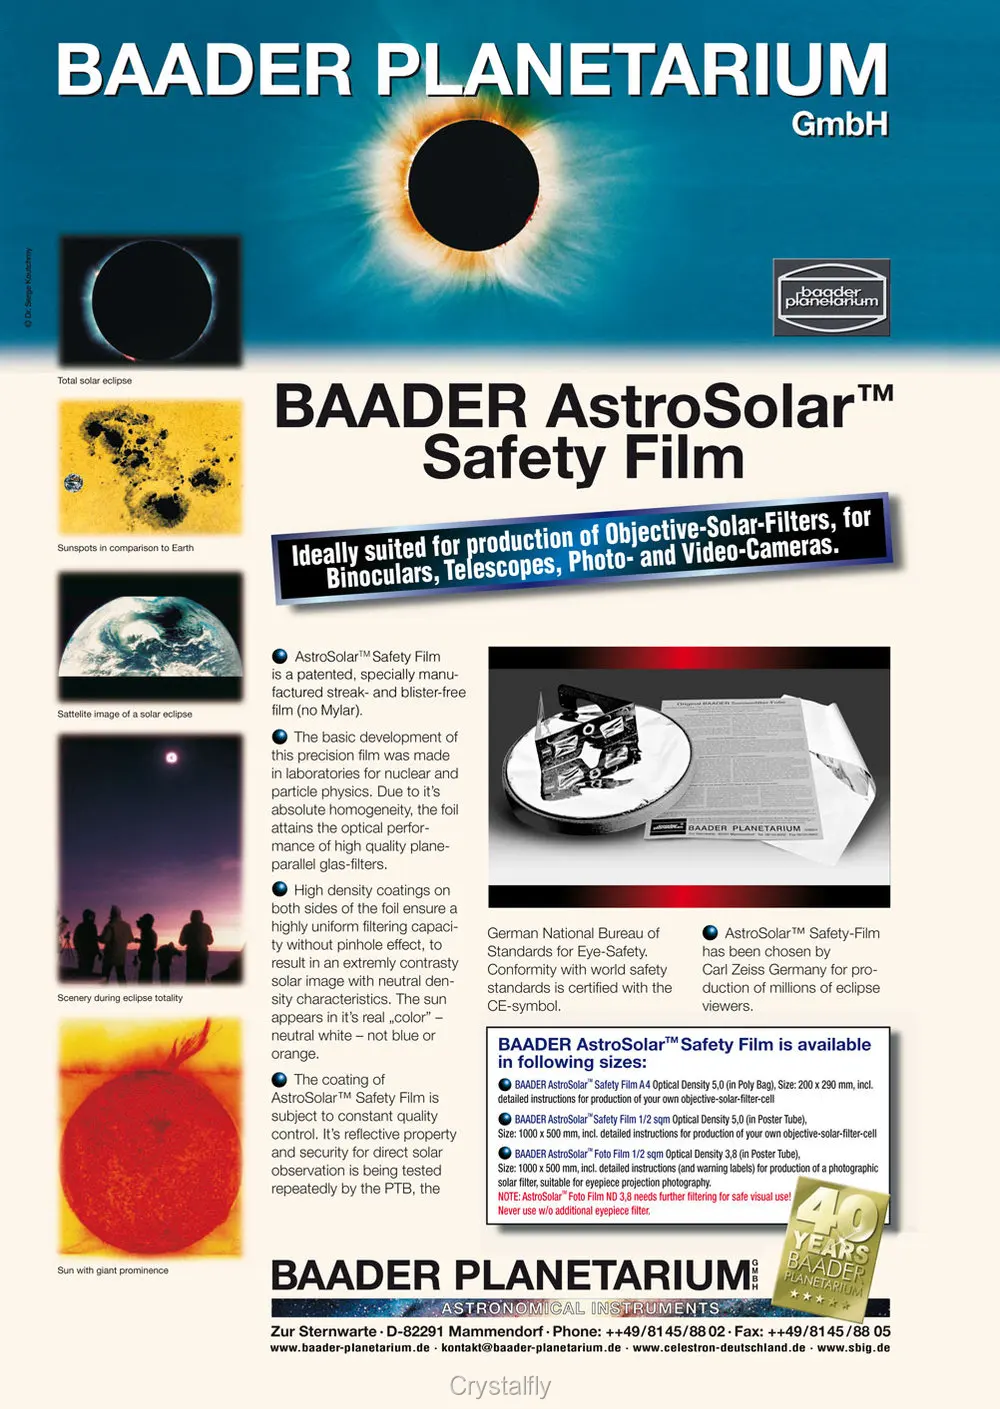 Brand New Baader AstroSolar Safty Film 15X15cm Optical Density 5.0 